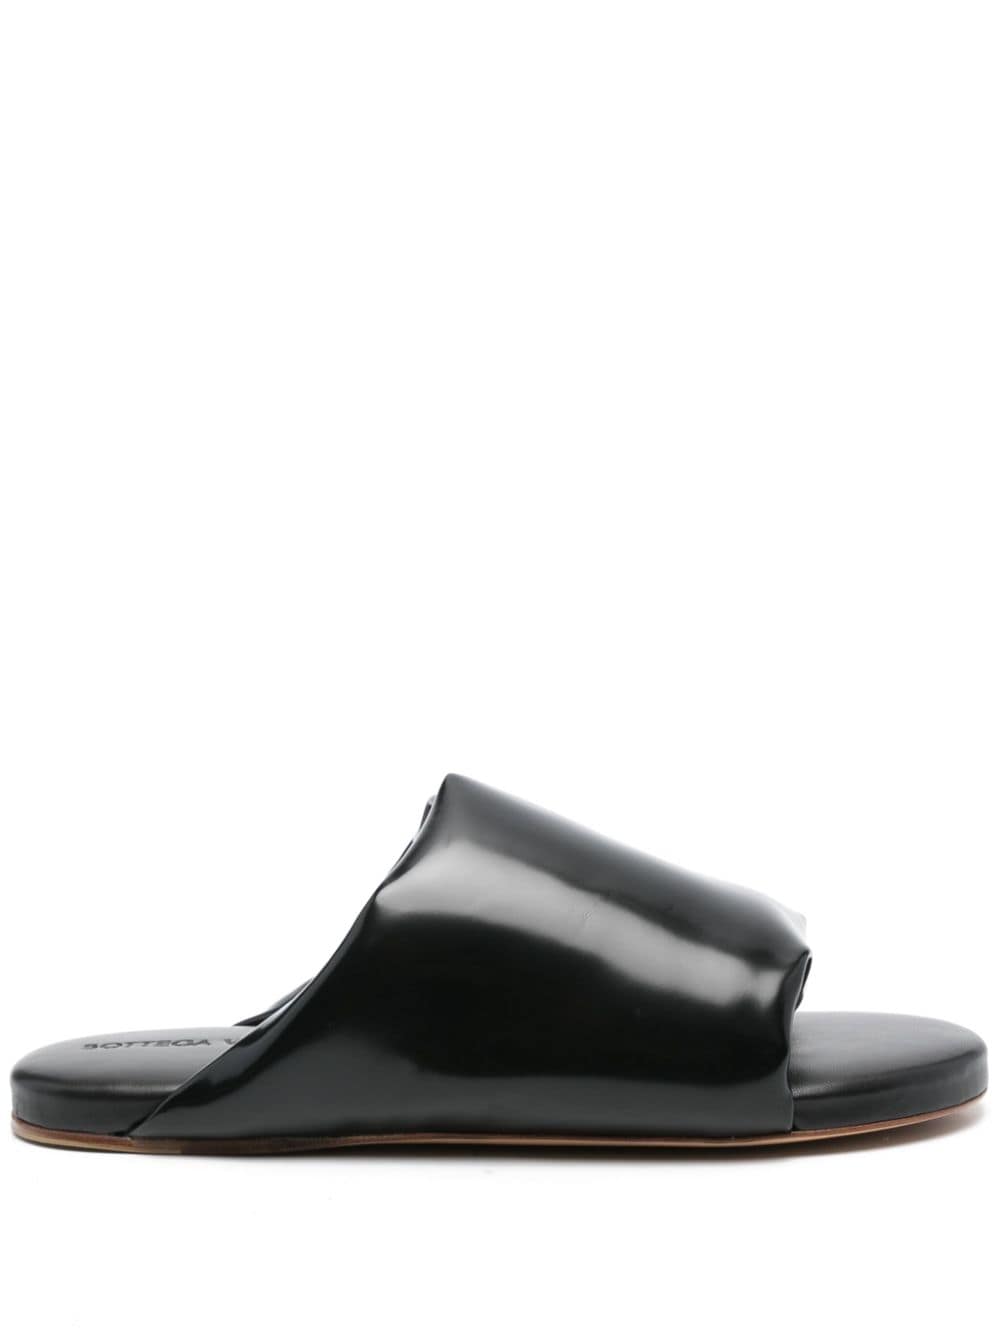 Bottega Veneta padded leather flat sandals - Nero